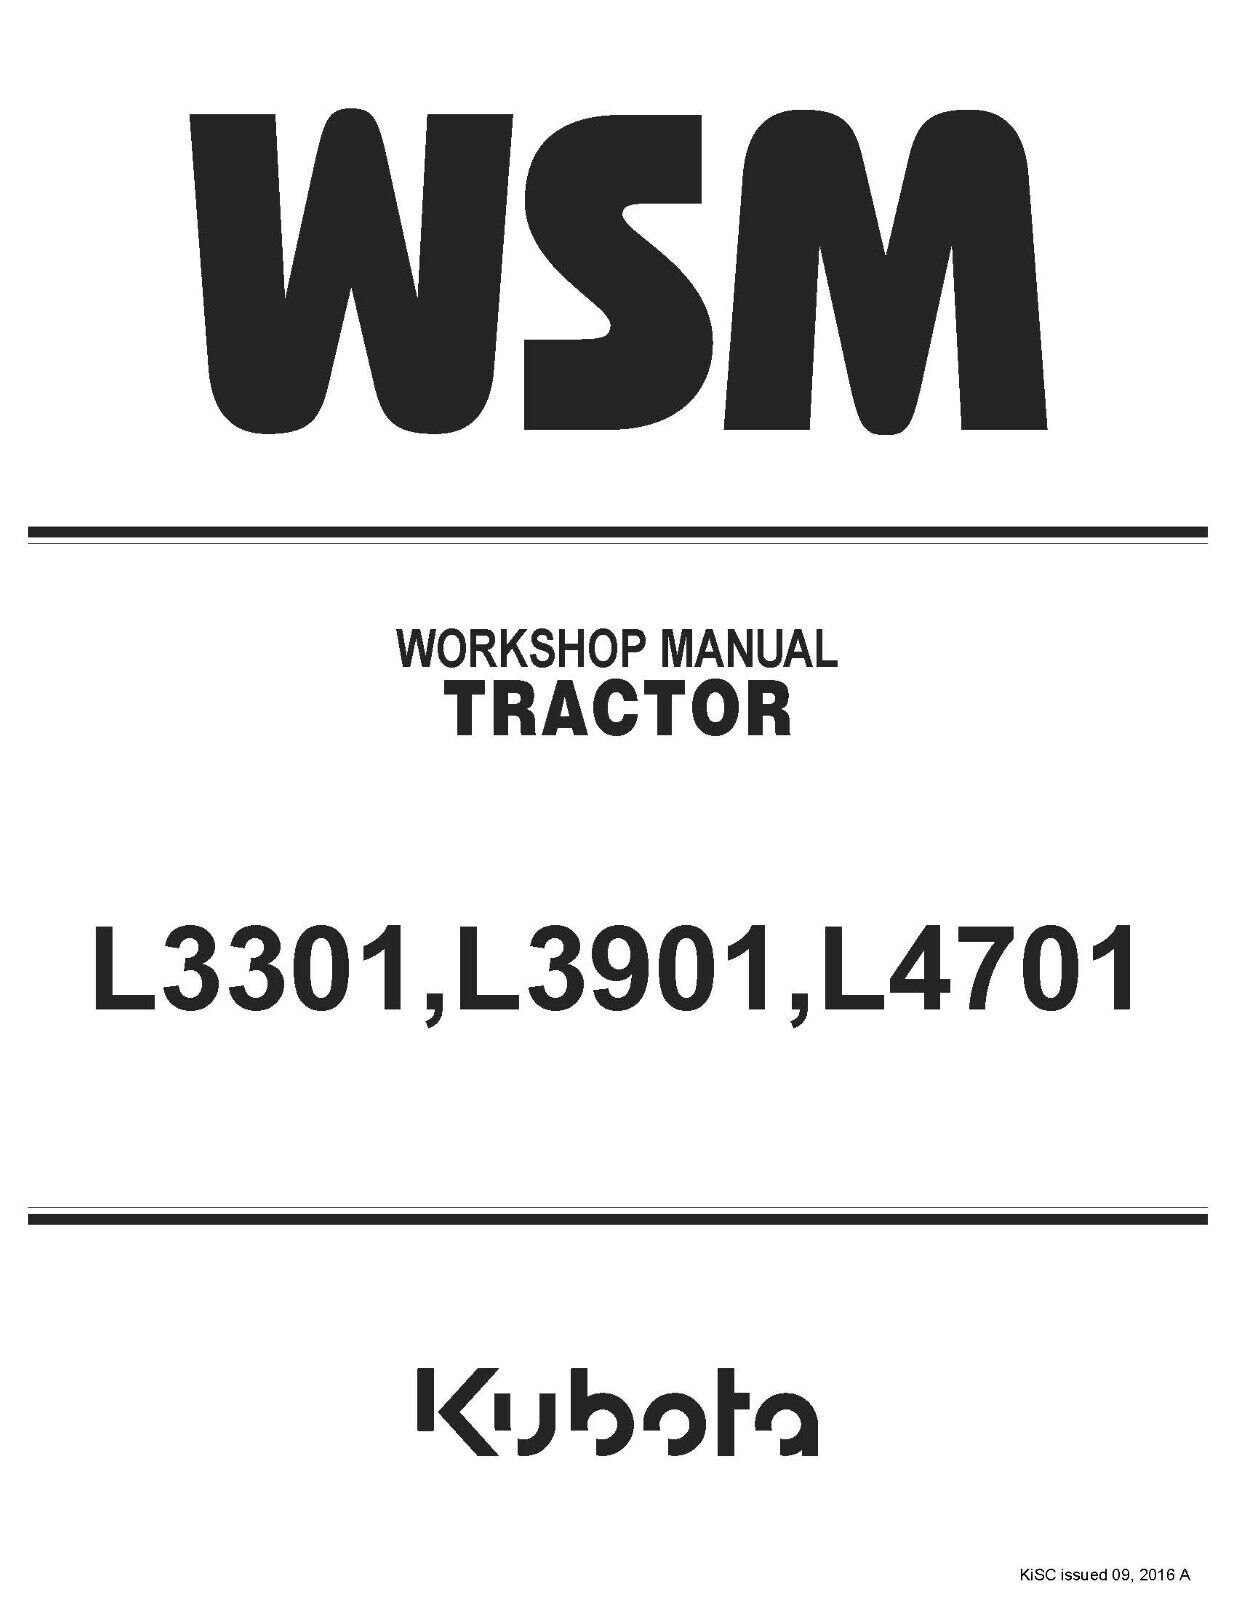 Kubota L3301 L3901 L4701 Tractor Workshop Manual Service Repair